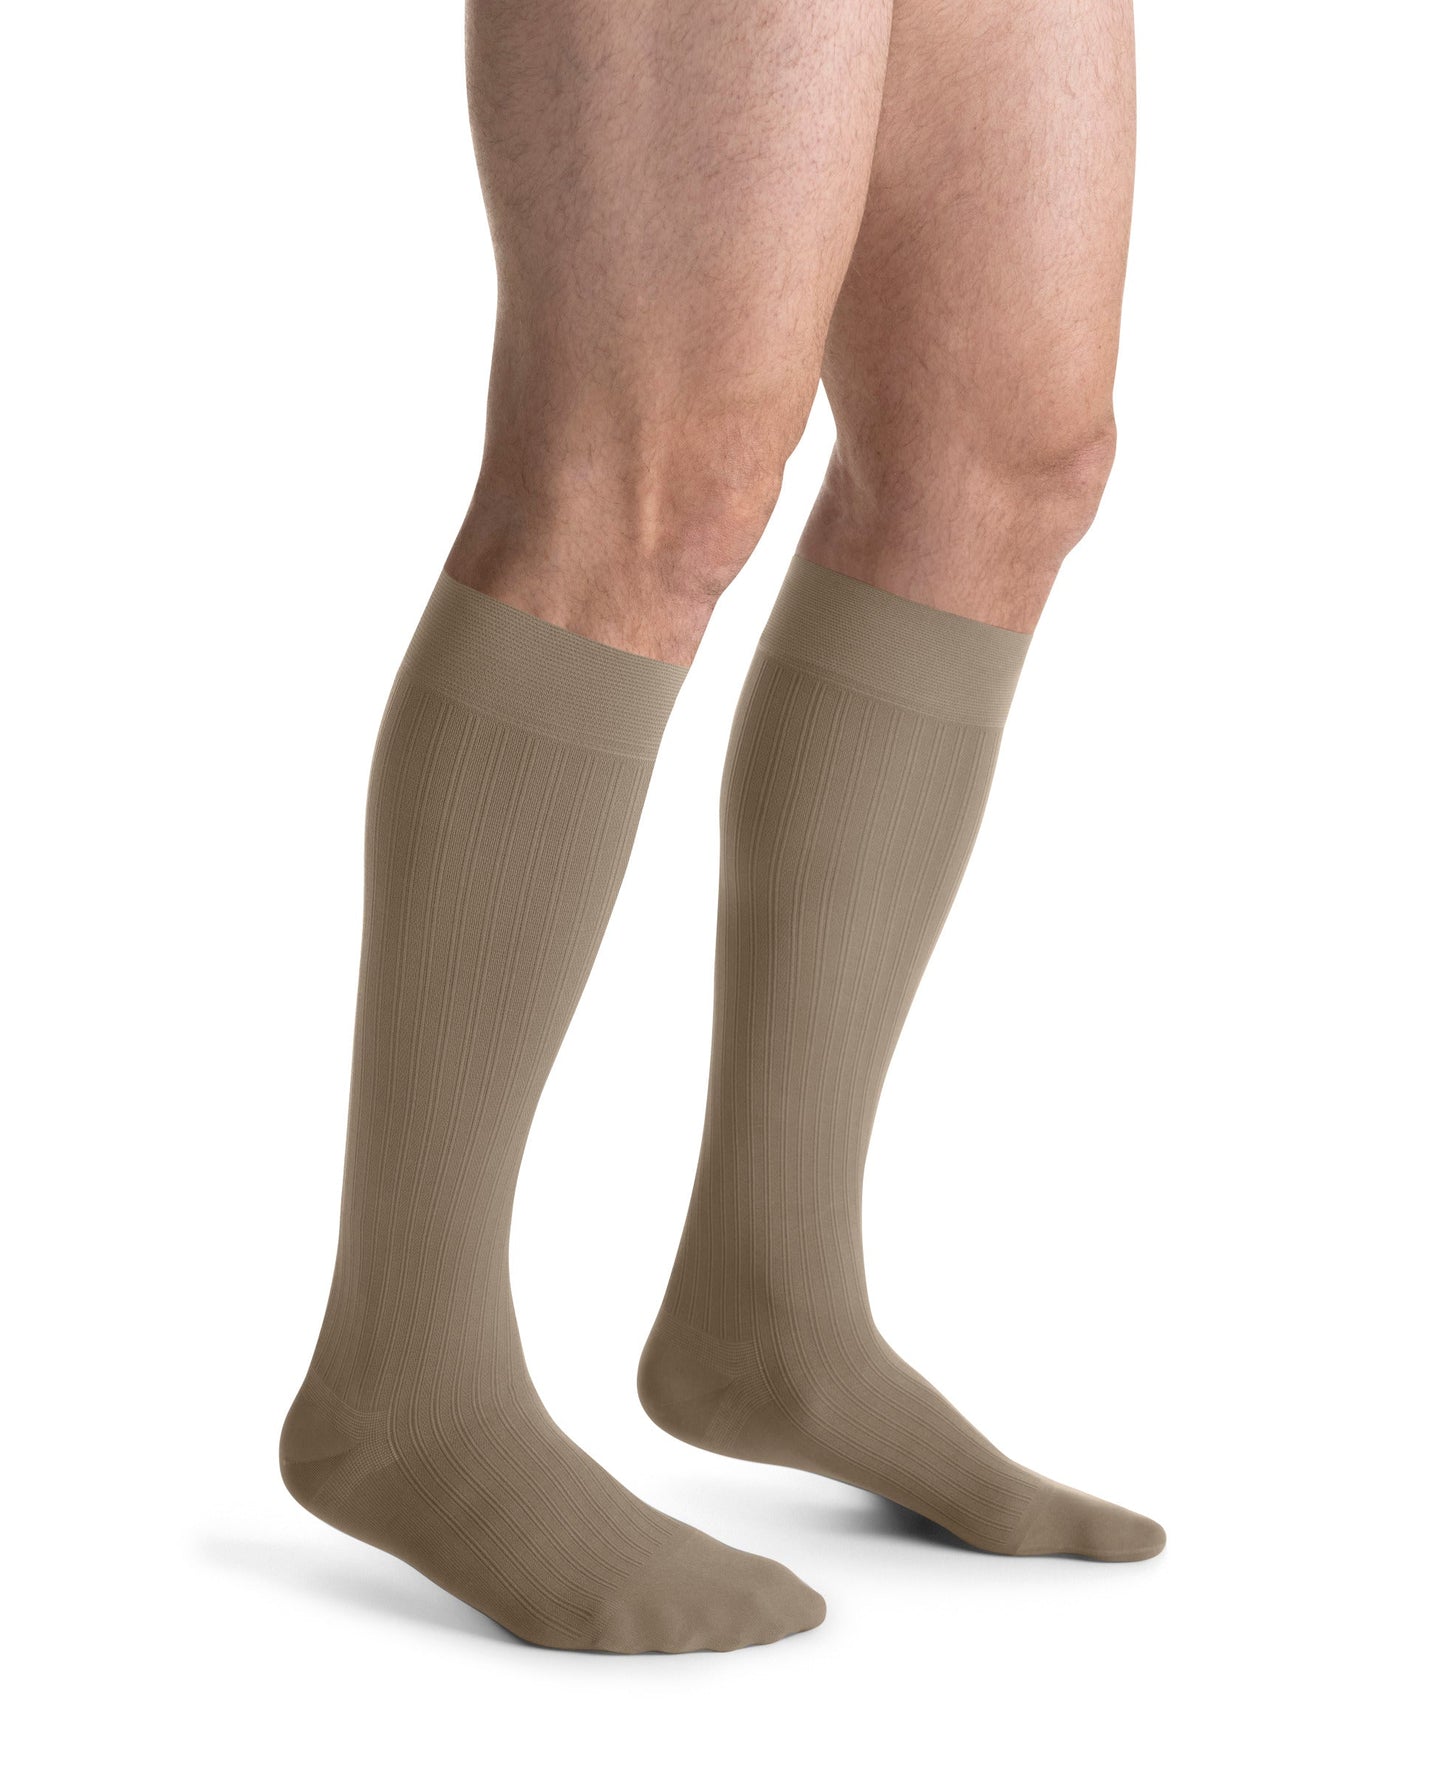 JOBST forMen Ambition Compression Socks 15-20 mmHg Knee High SoftFit Closed Toe Long